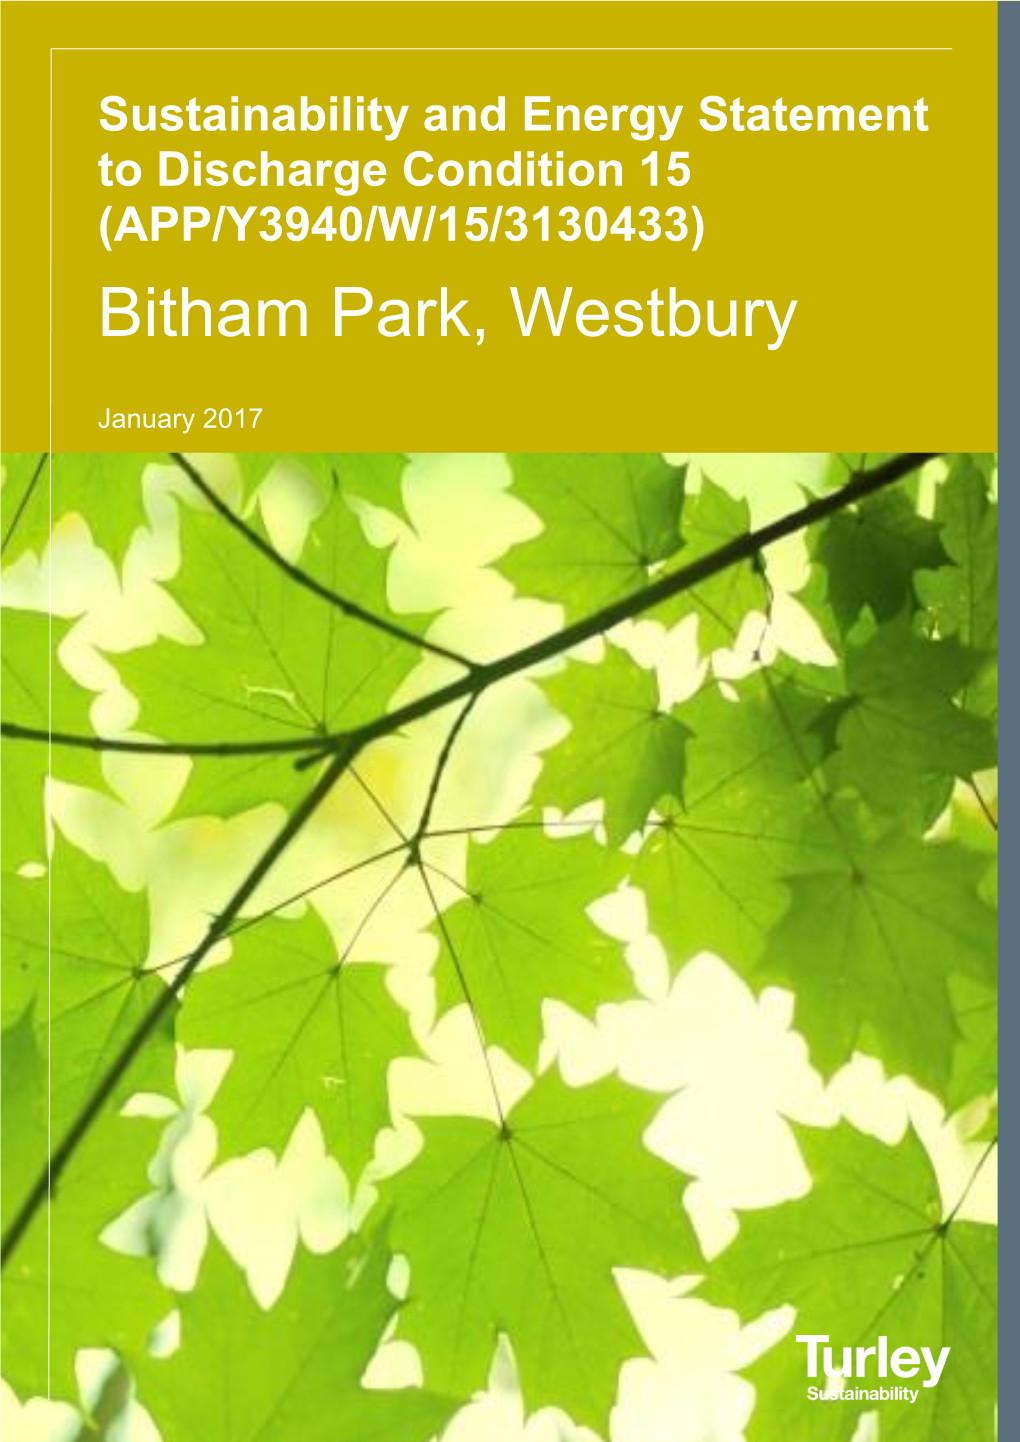 Bitham Park, Westbury